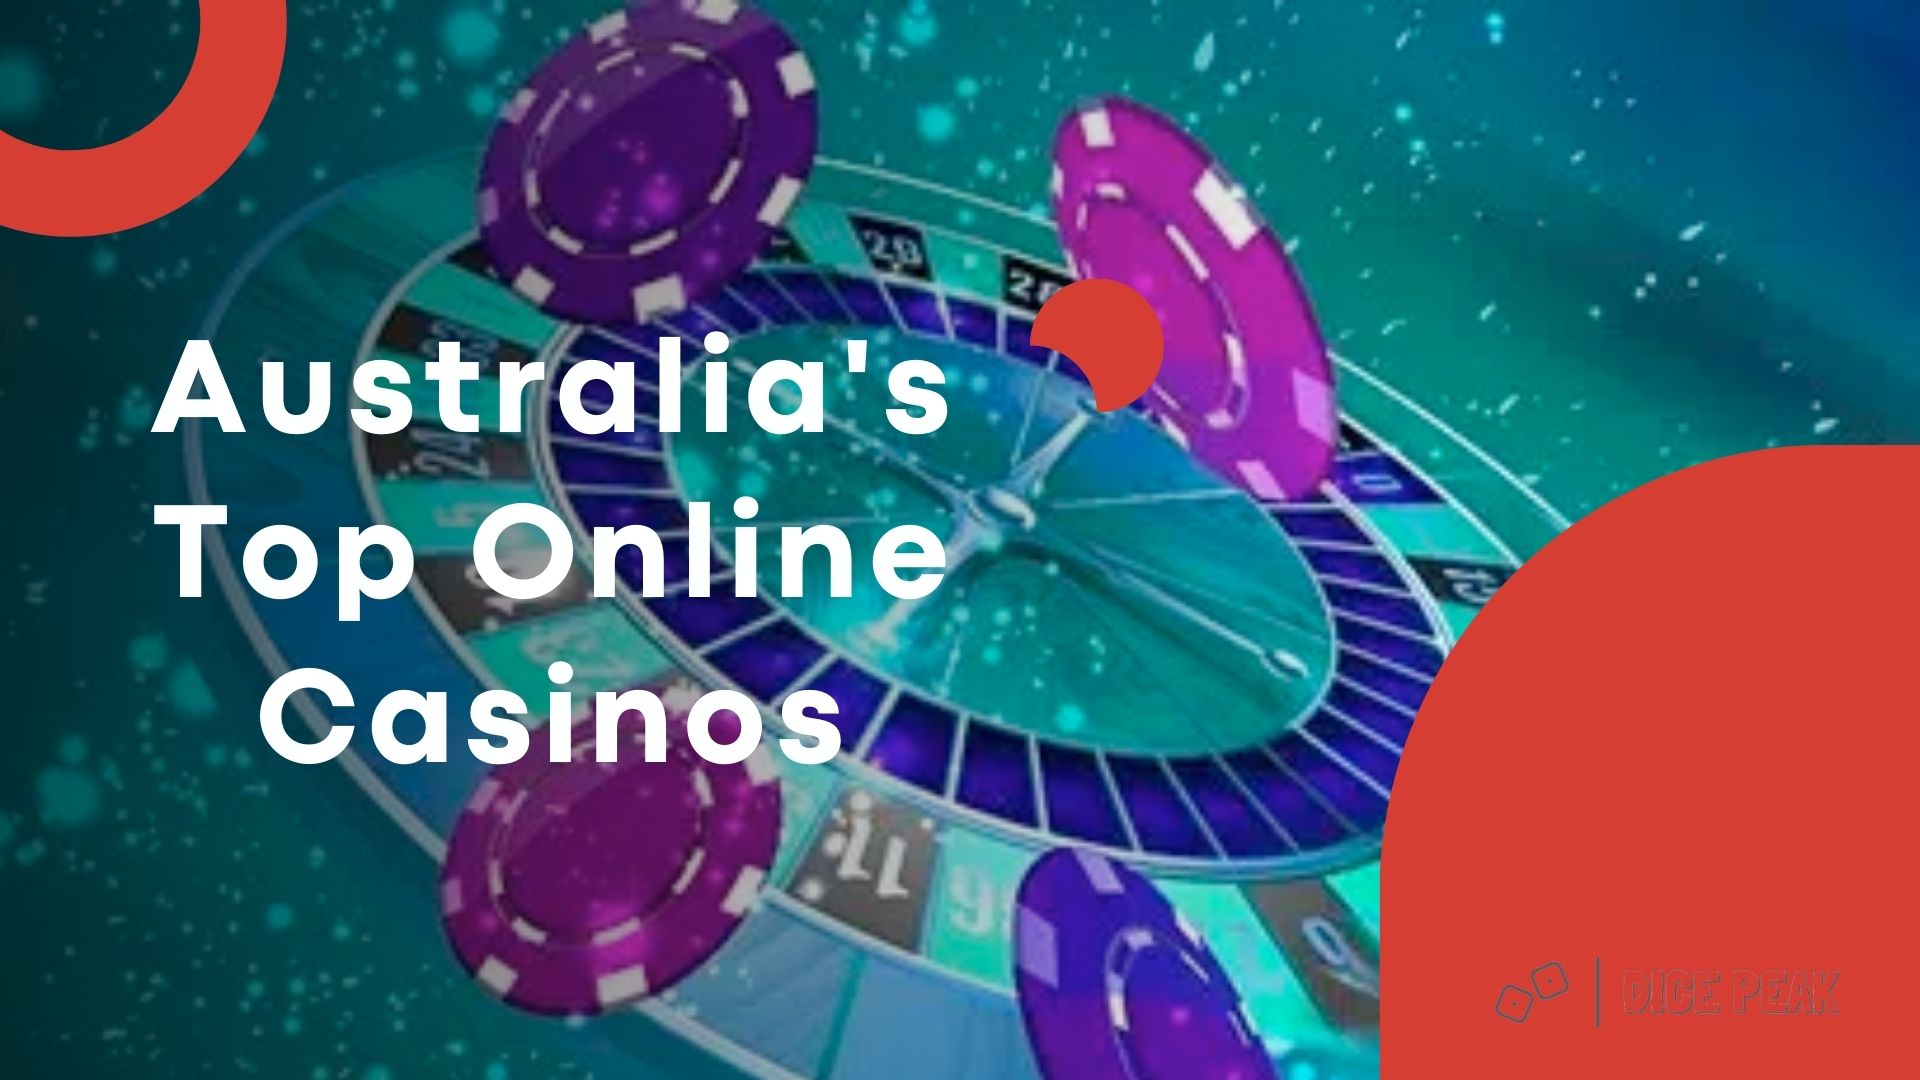 From Blackjack to Baccarat: Australia's Top Online Casinos